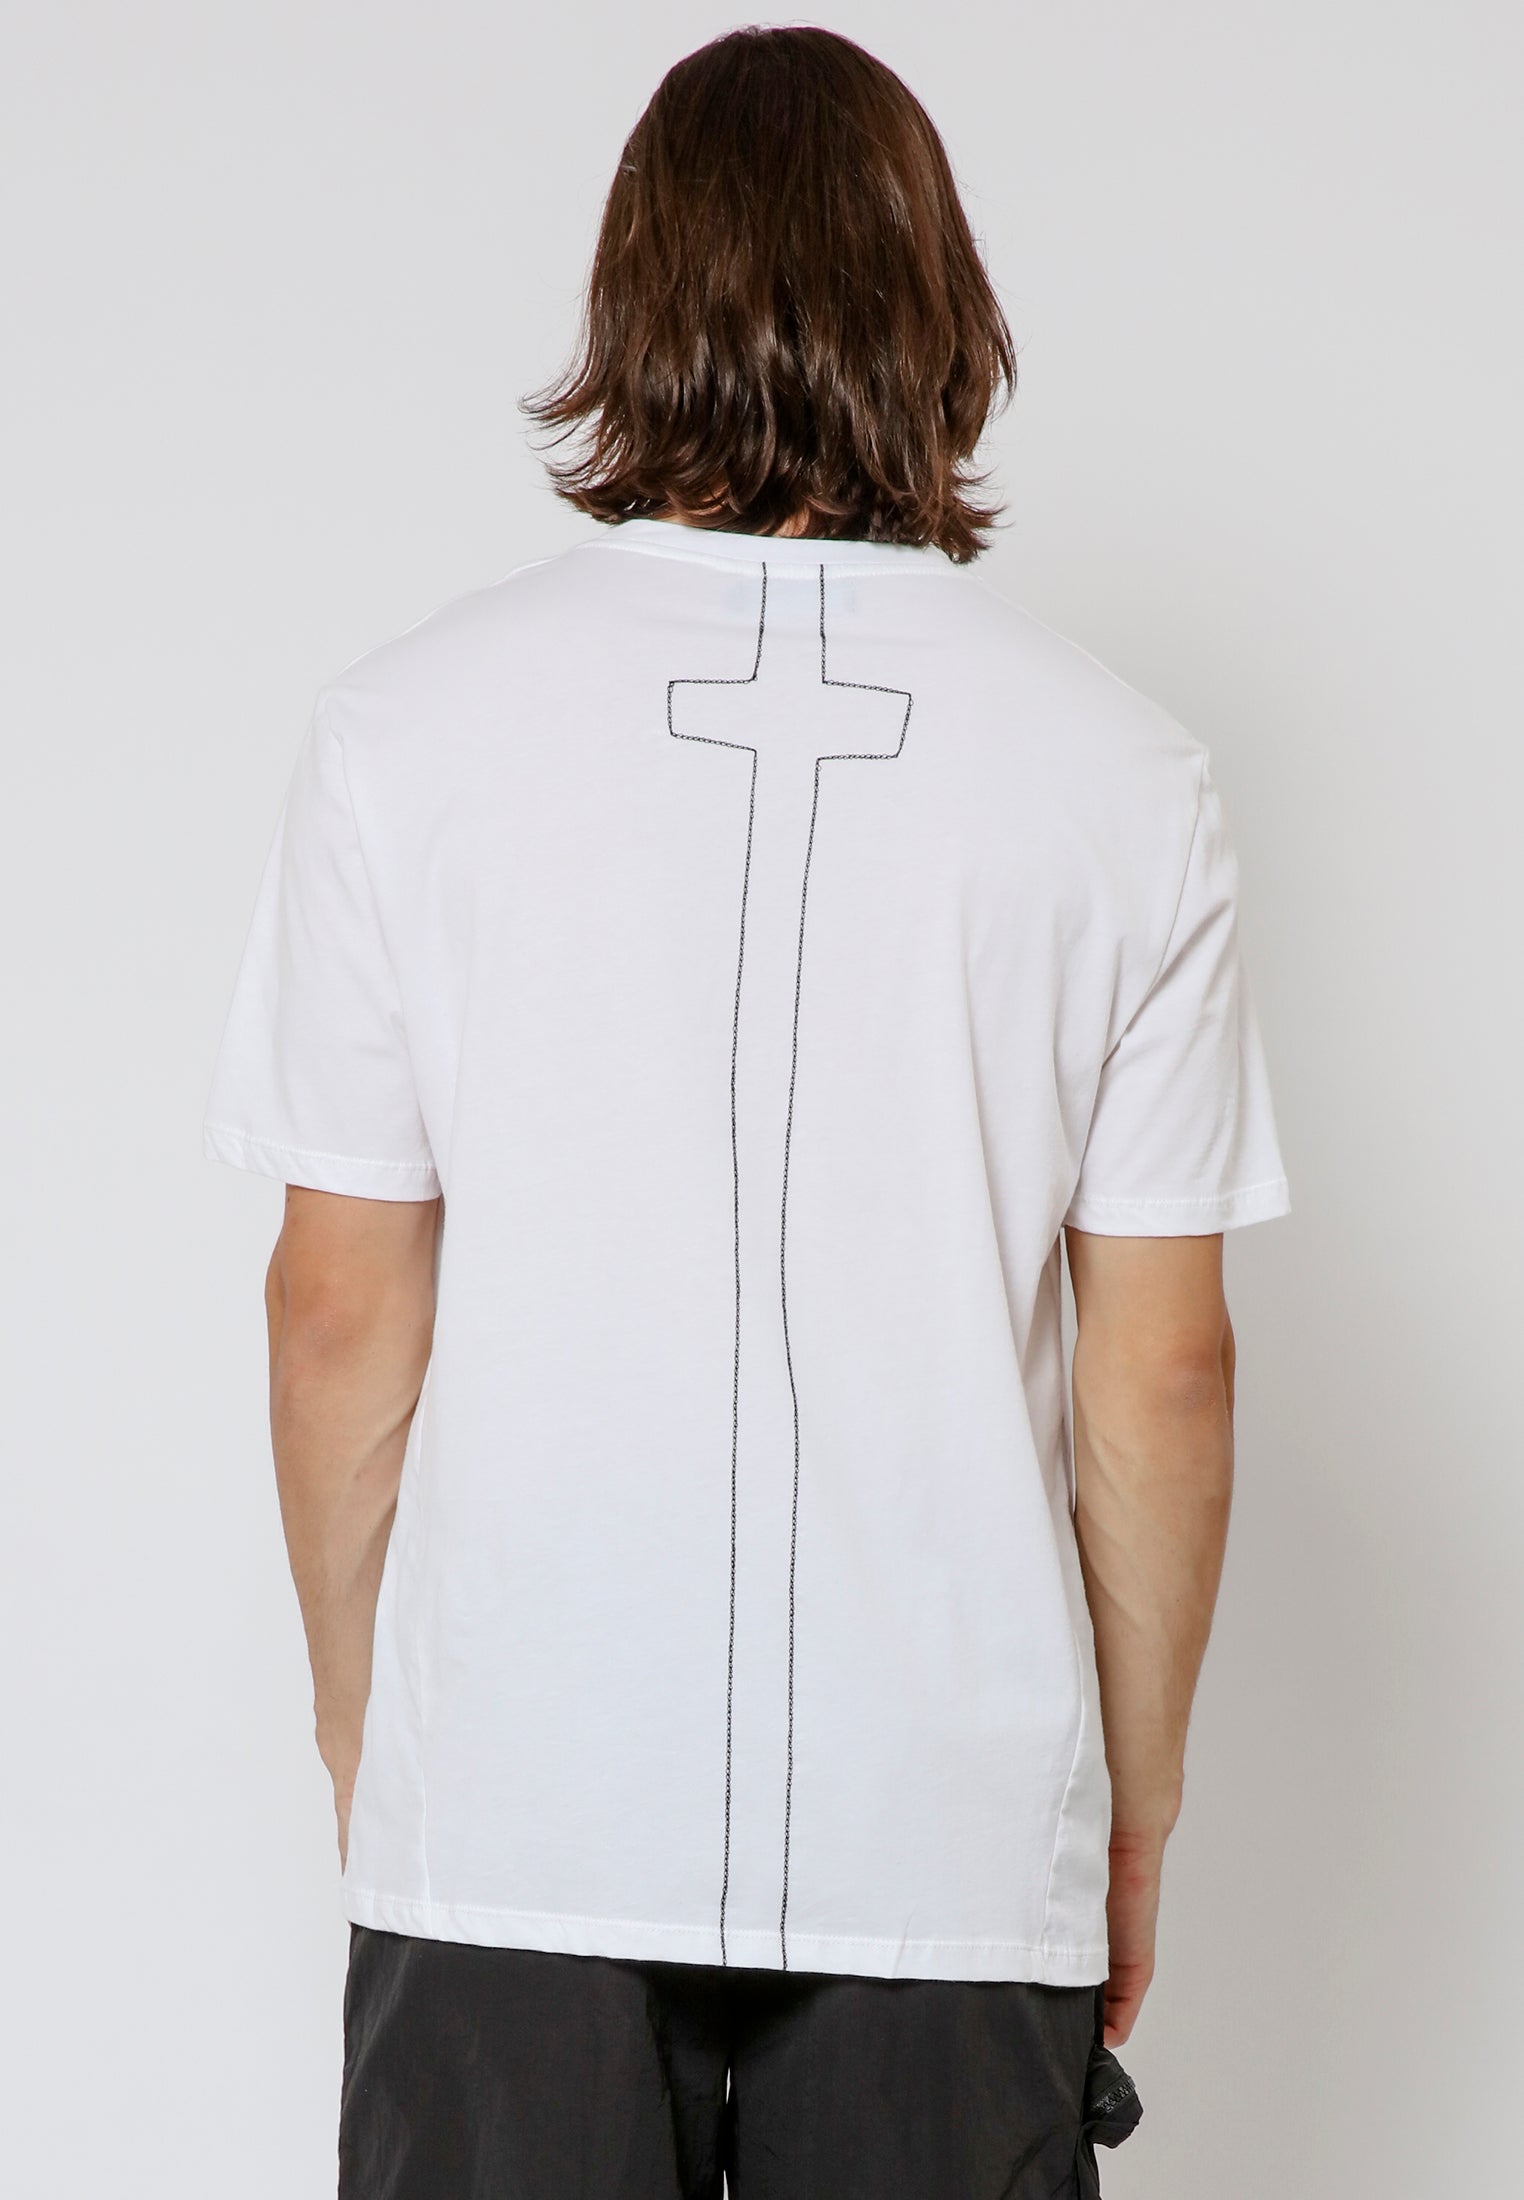 RELIGION Spectrum Graphic White T-Shirt